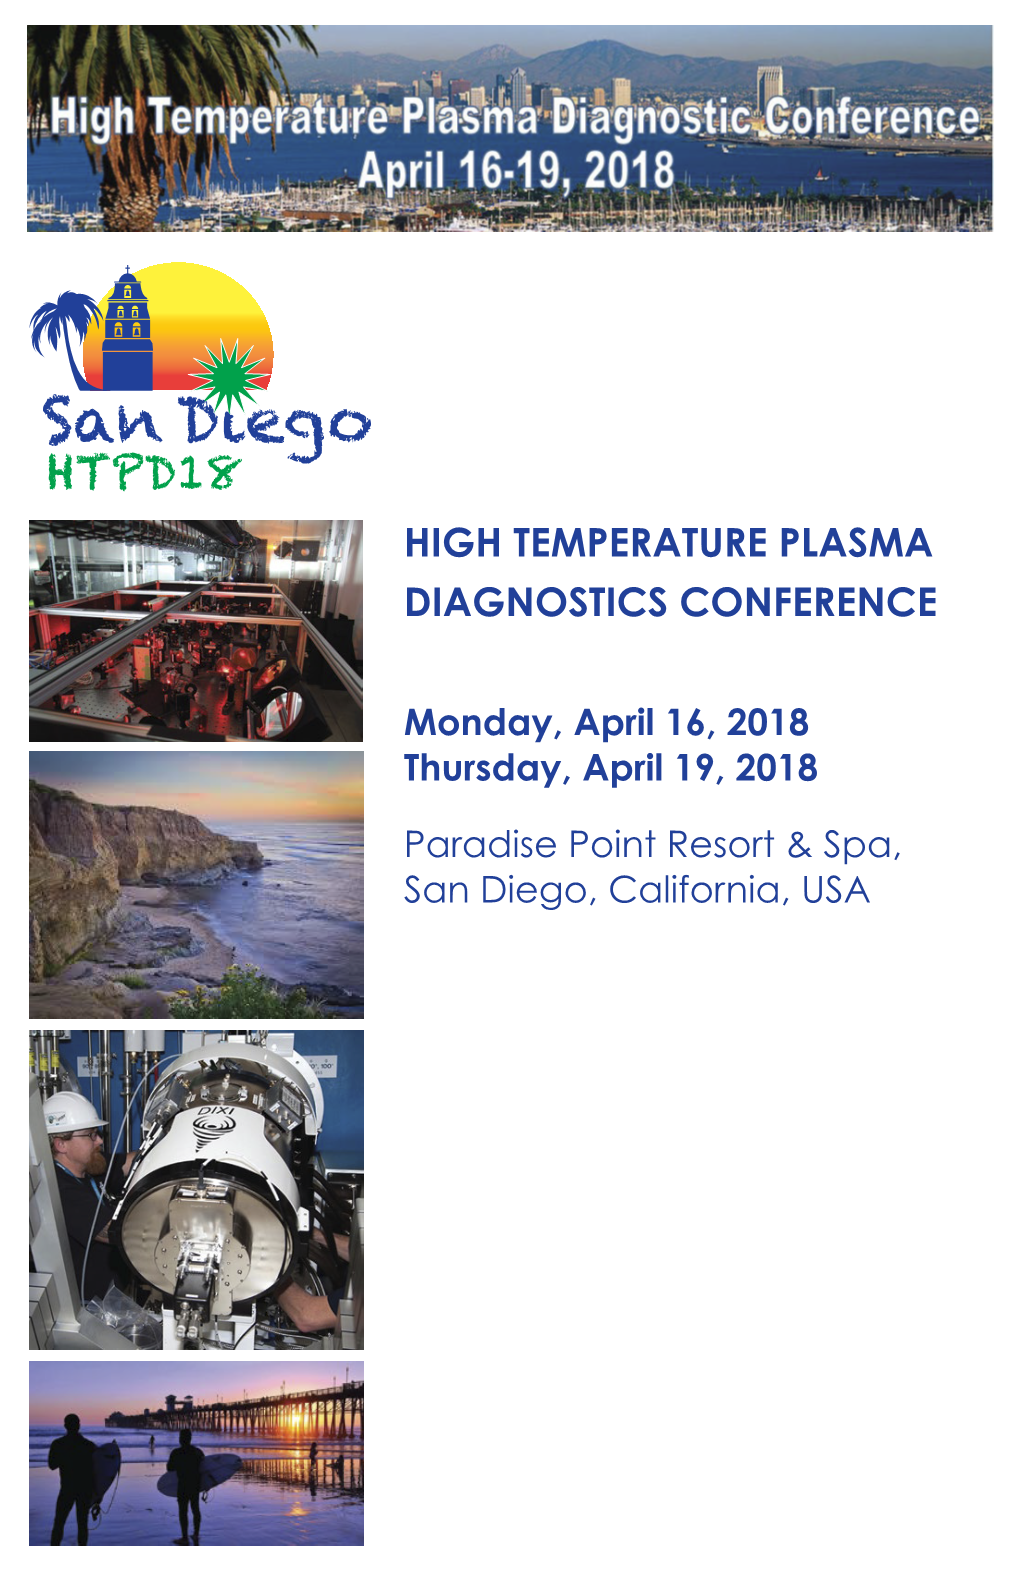 High Temperature Plasma Diagnostics Conference